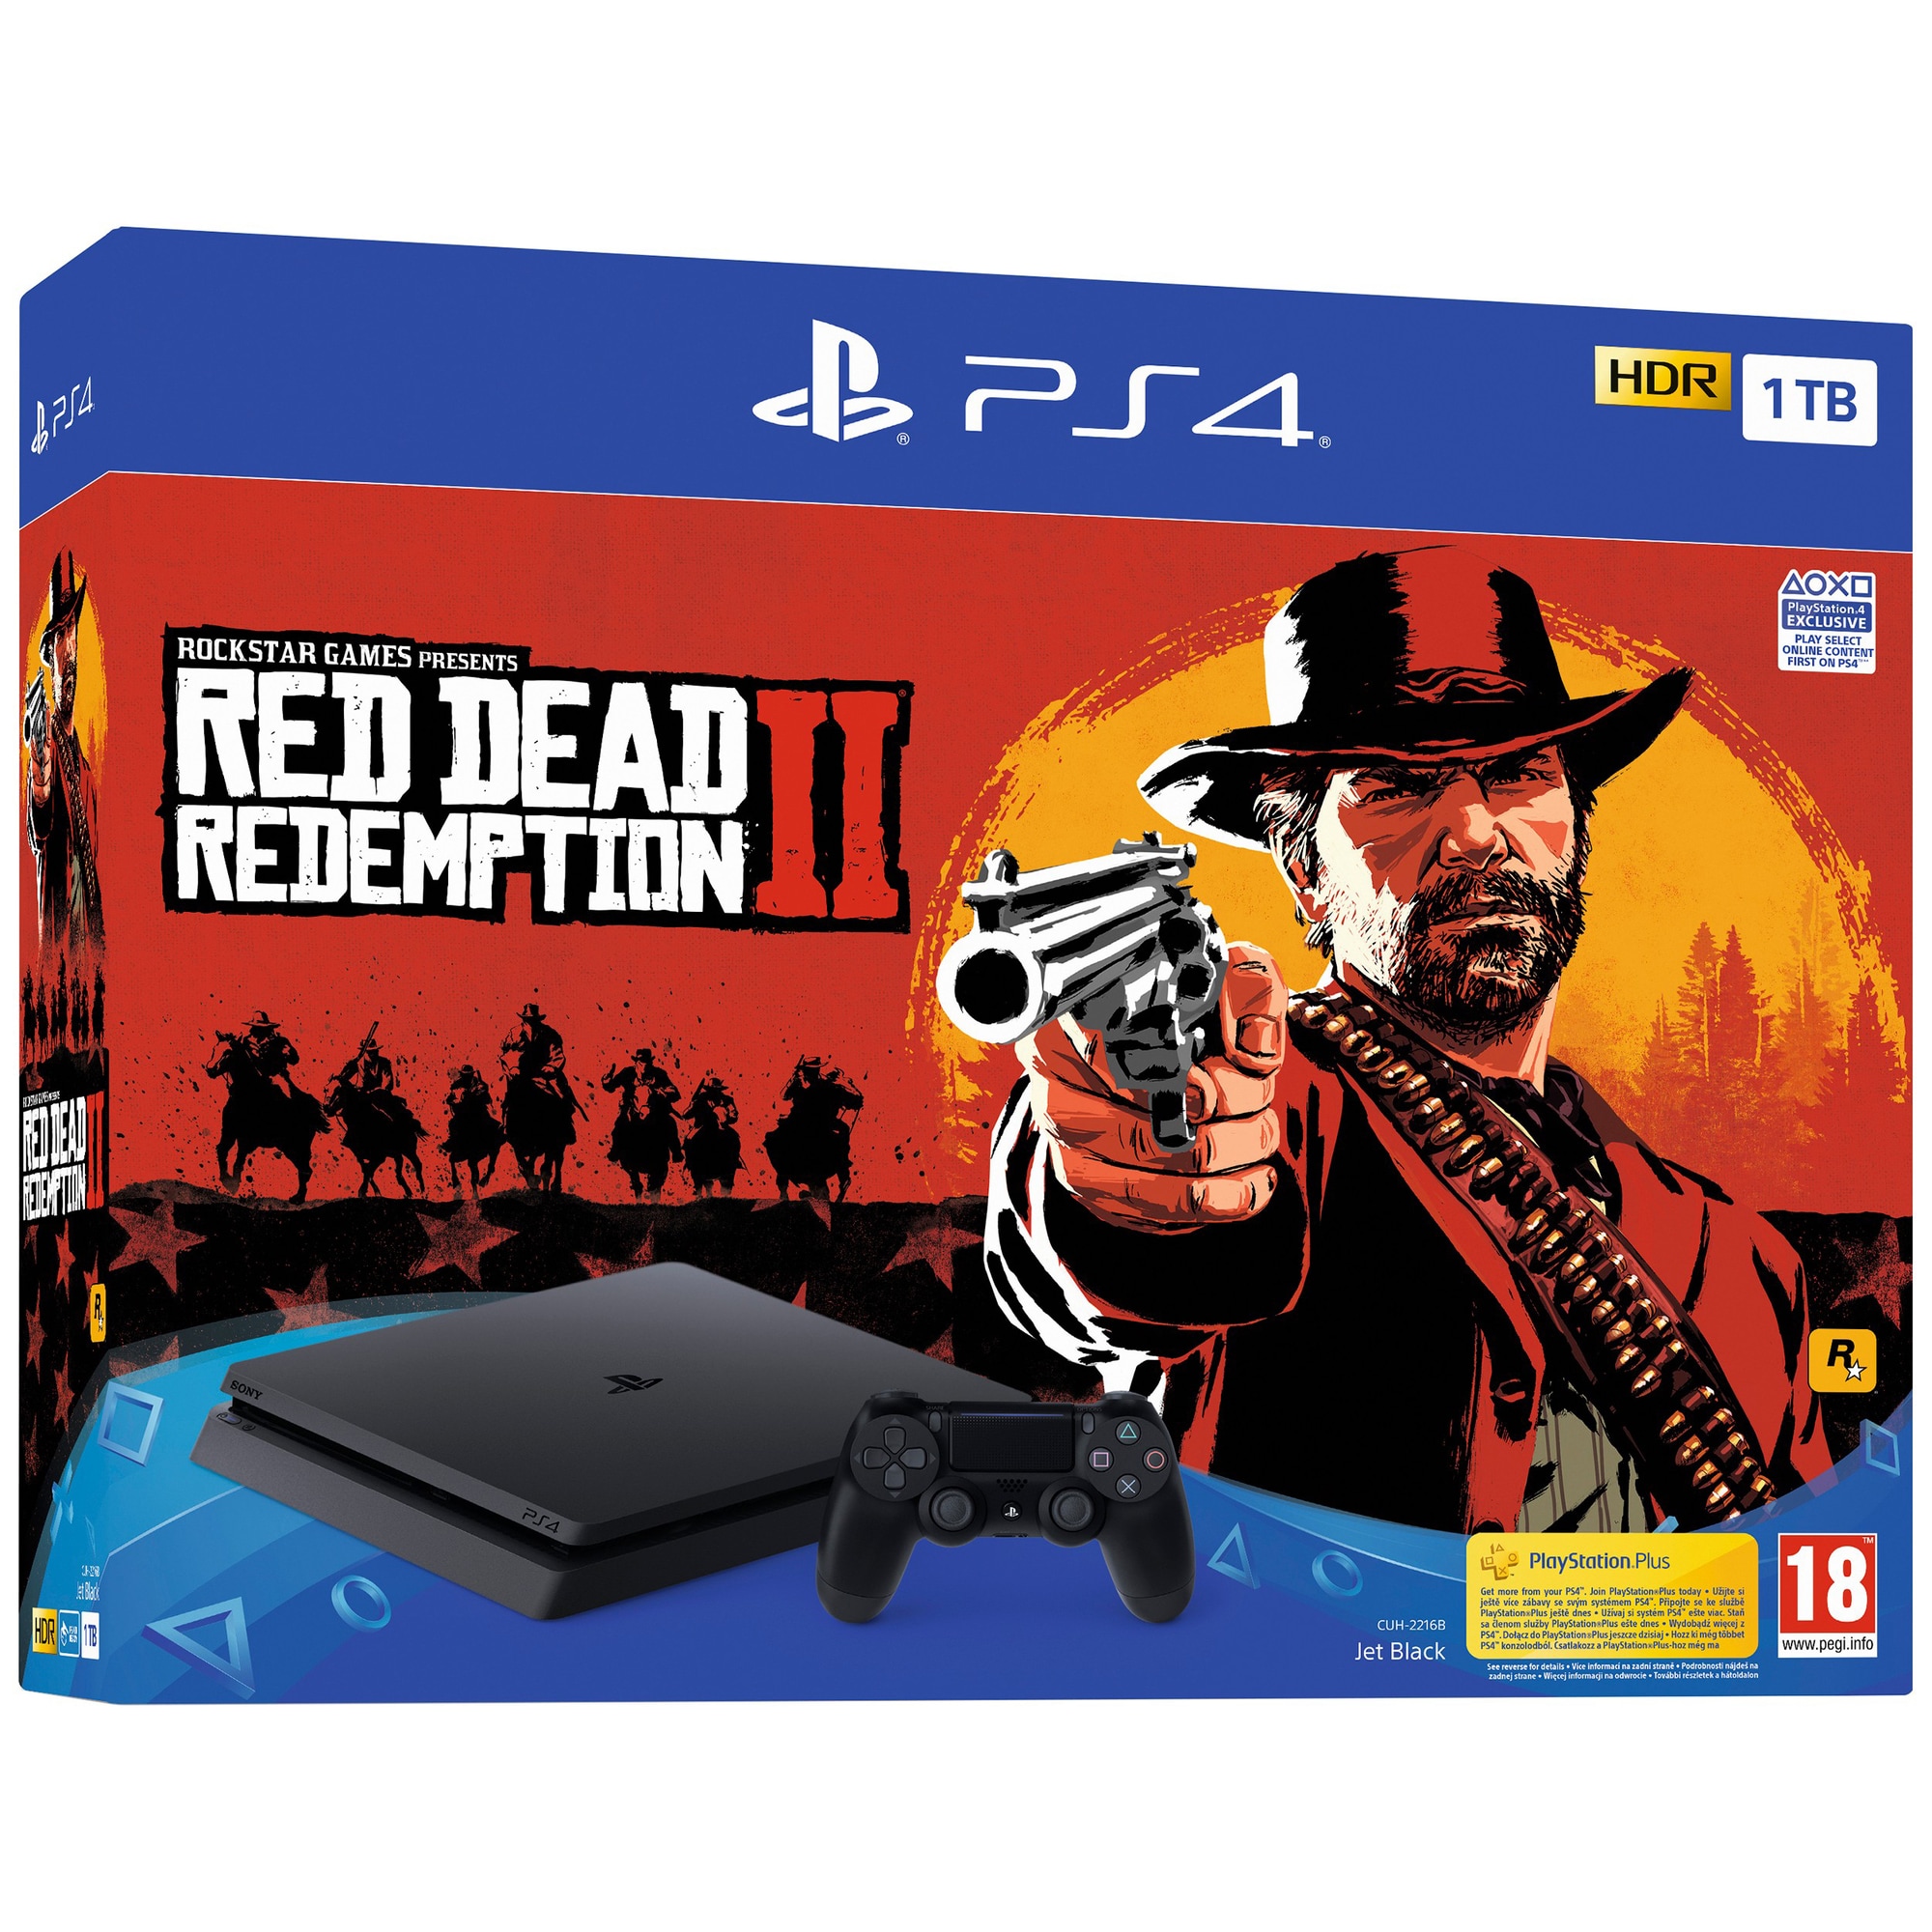 PlayStation 4 Slim 1 TB + Dead Redemption Elgiganten